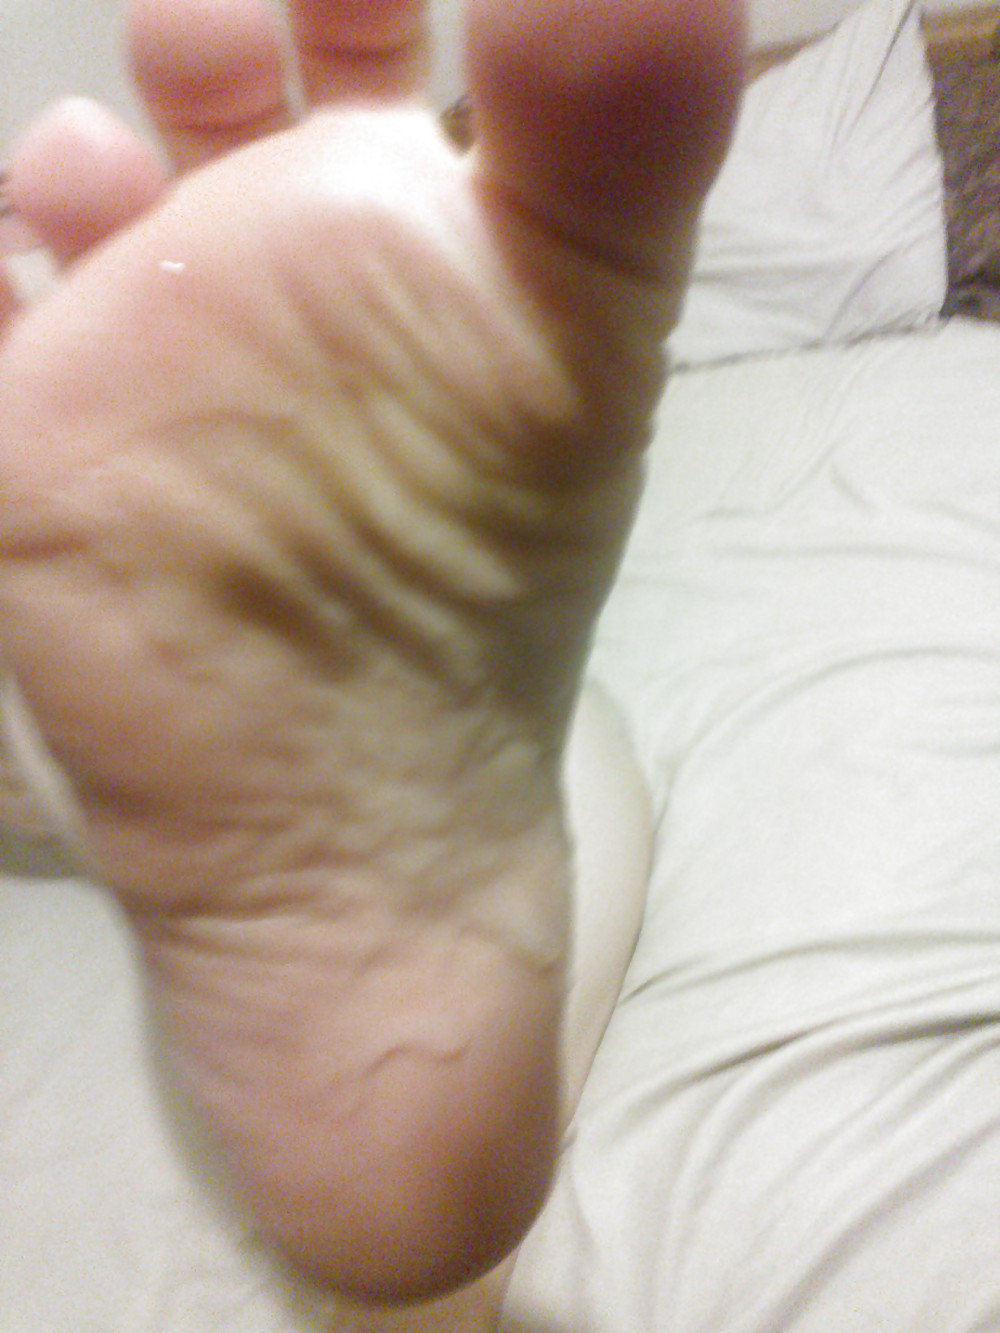 My girlfriends feet #5666728